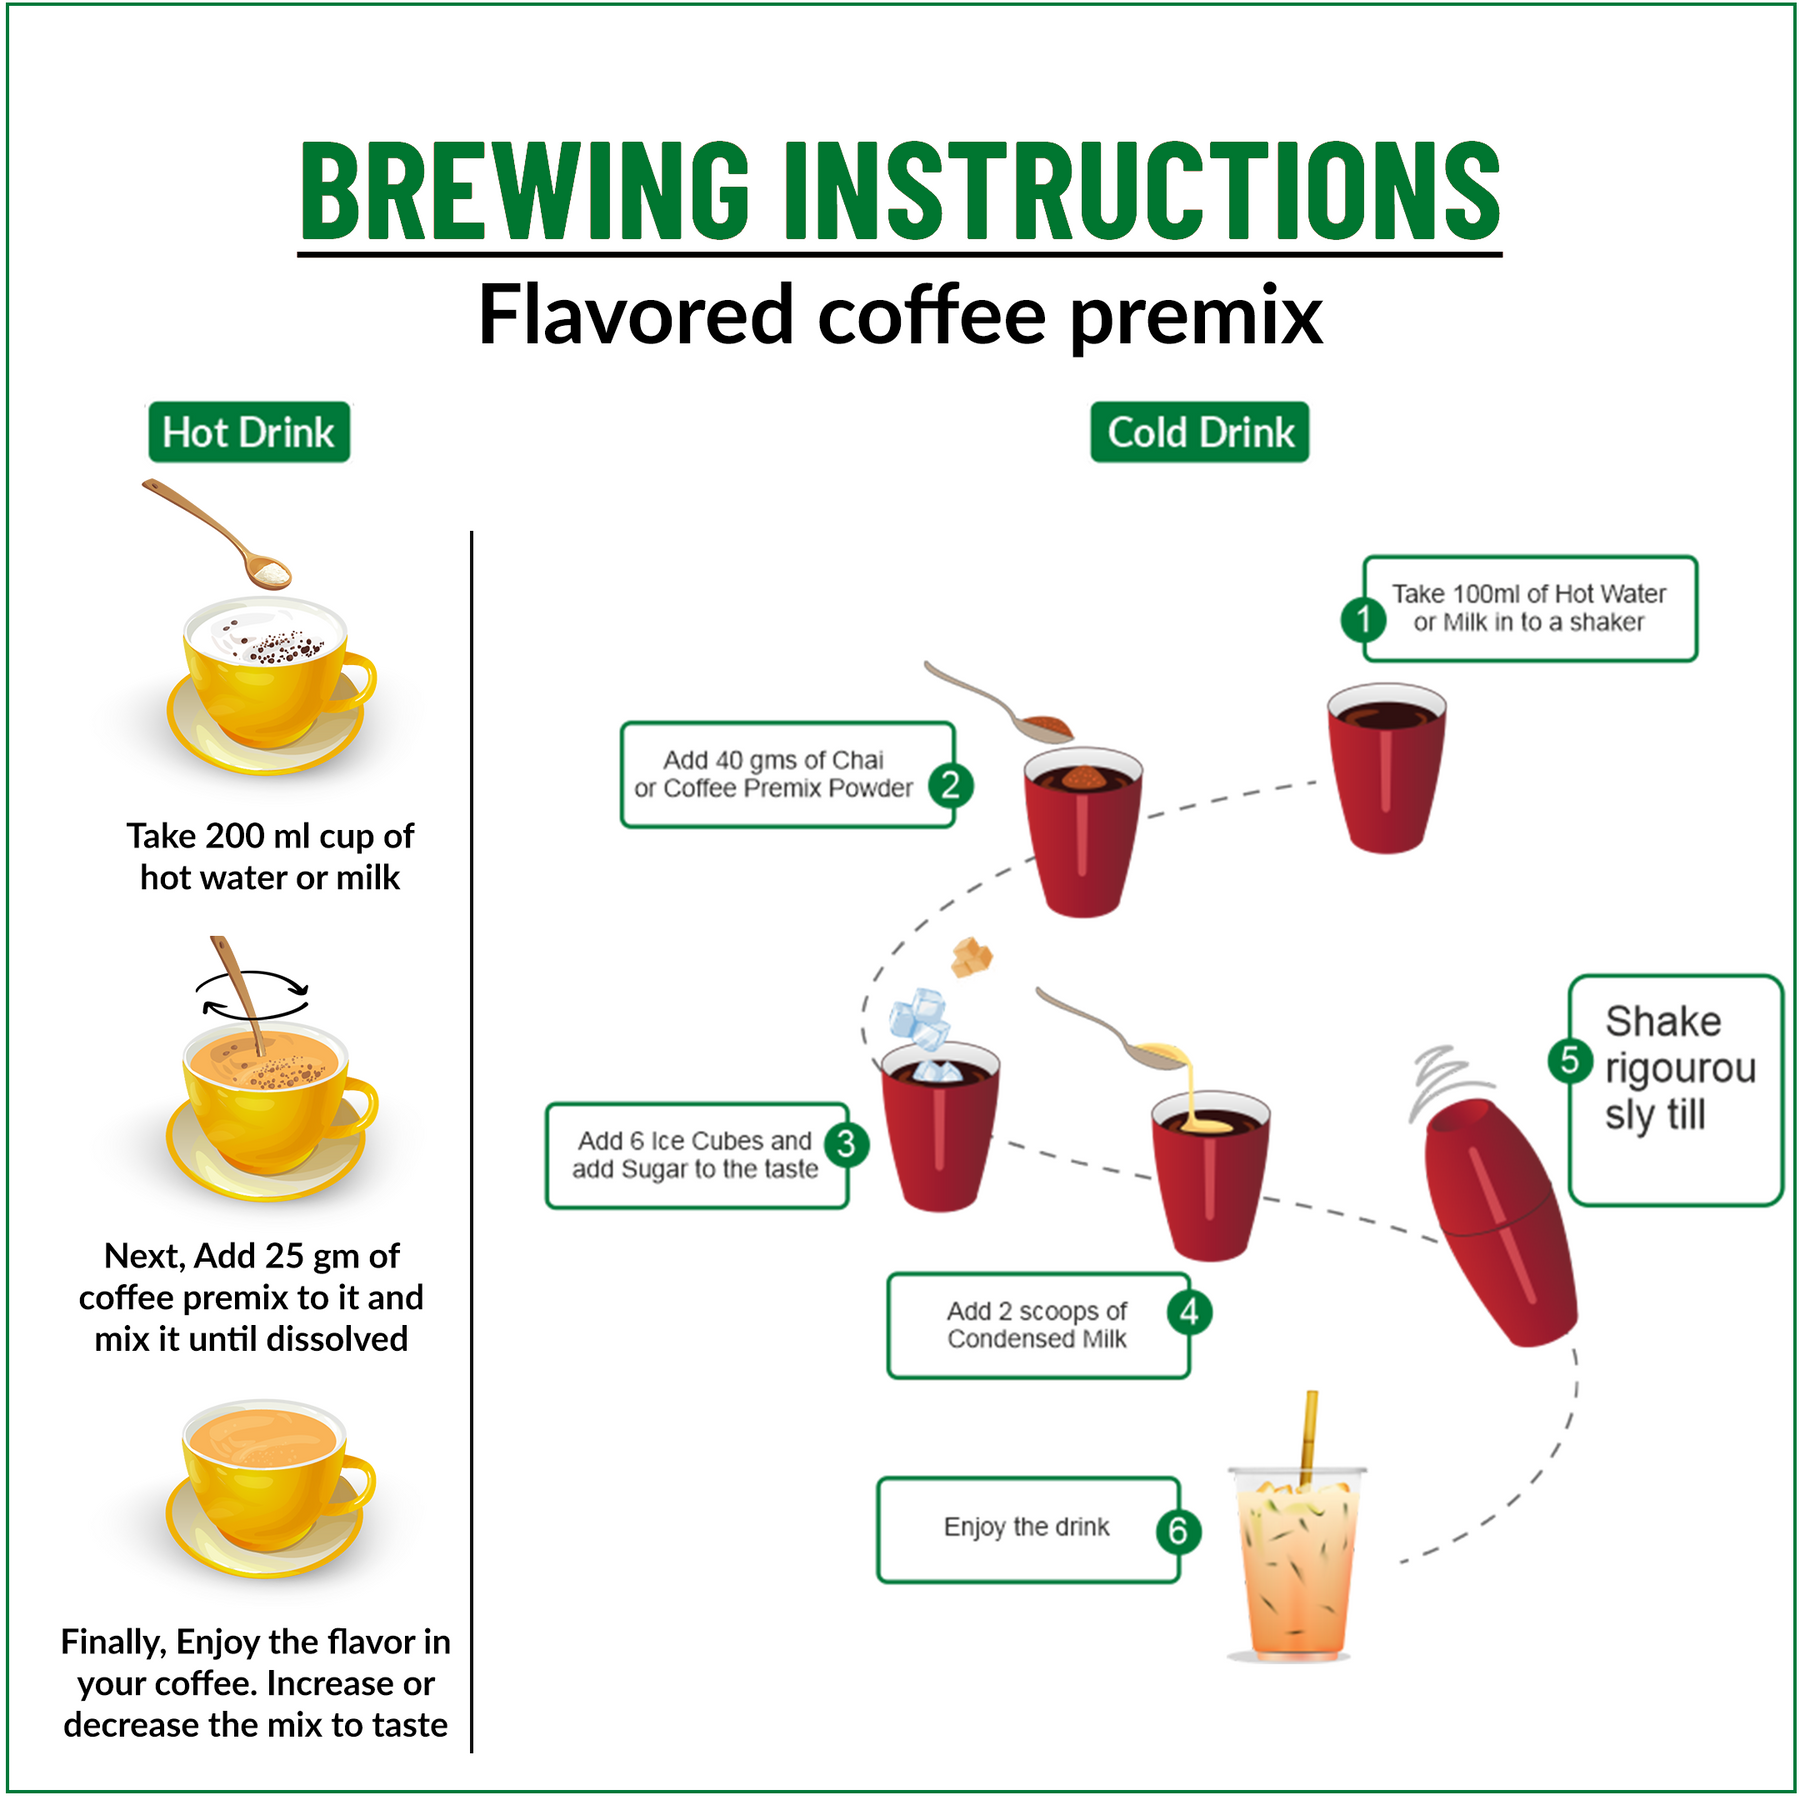 Butterscotch Caramel Instant Coffee Premix (2 in 1) - 250 gms